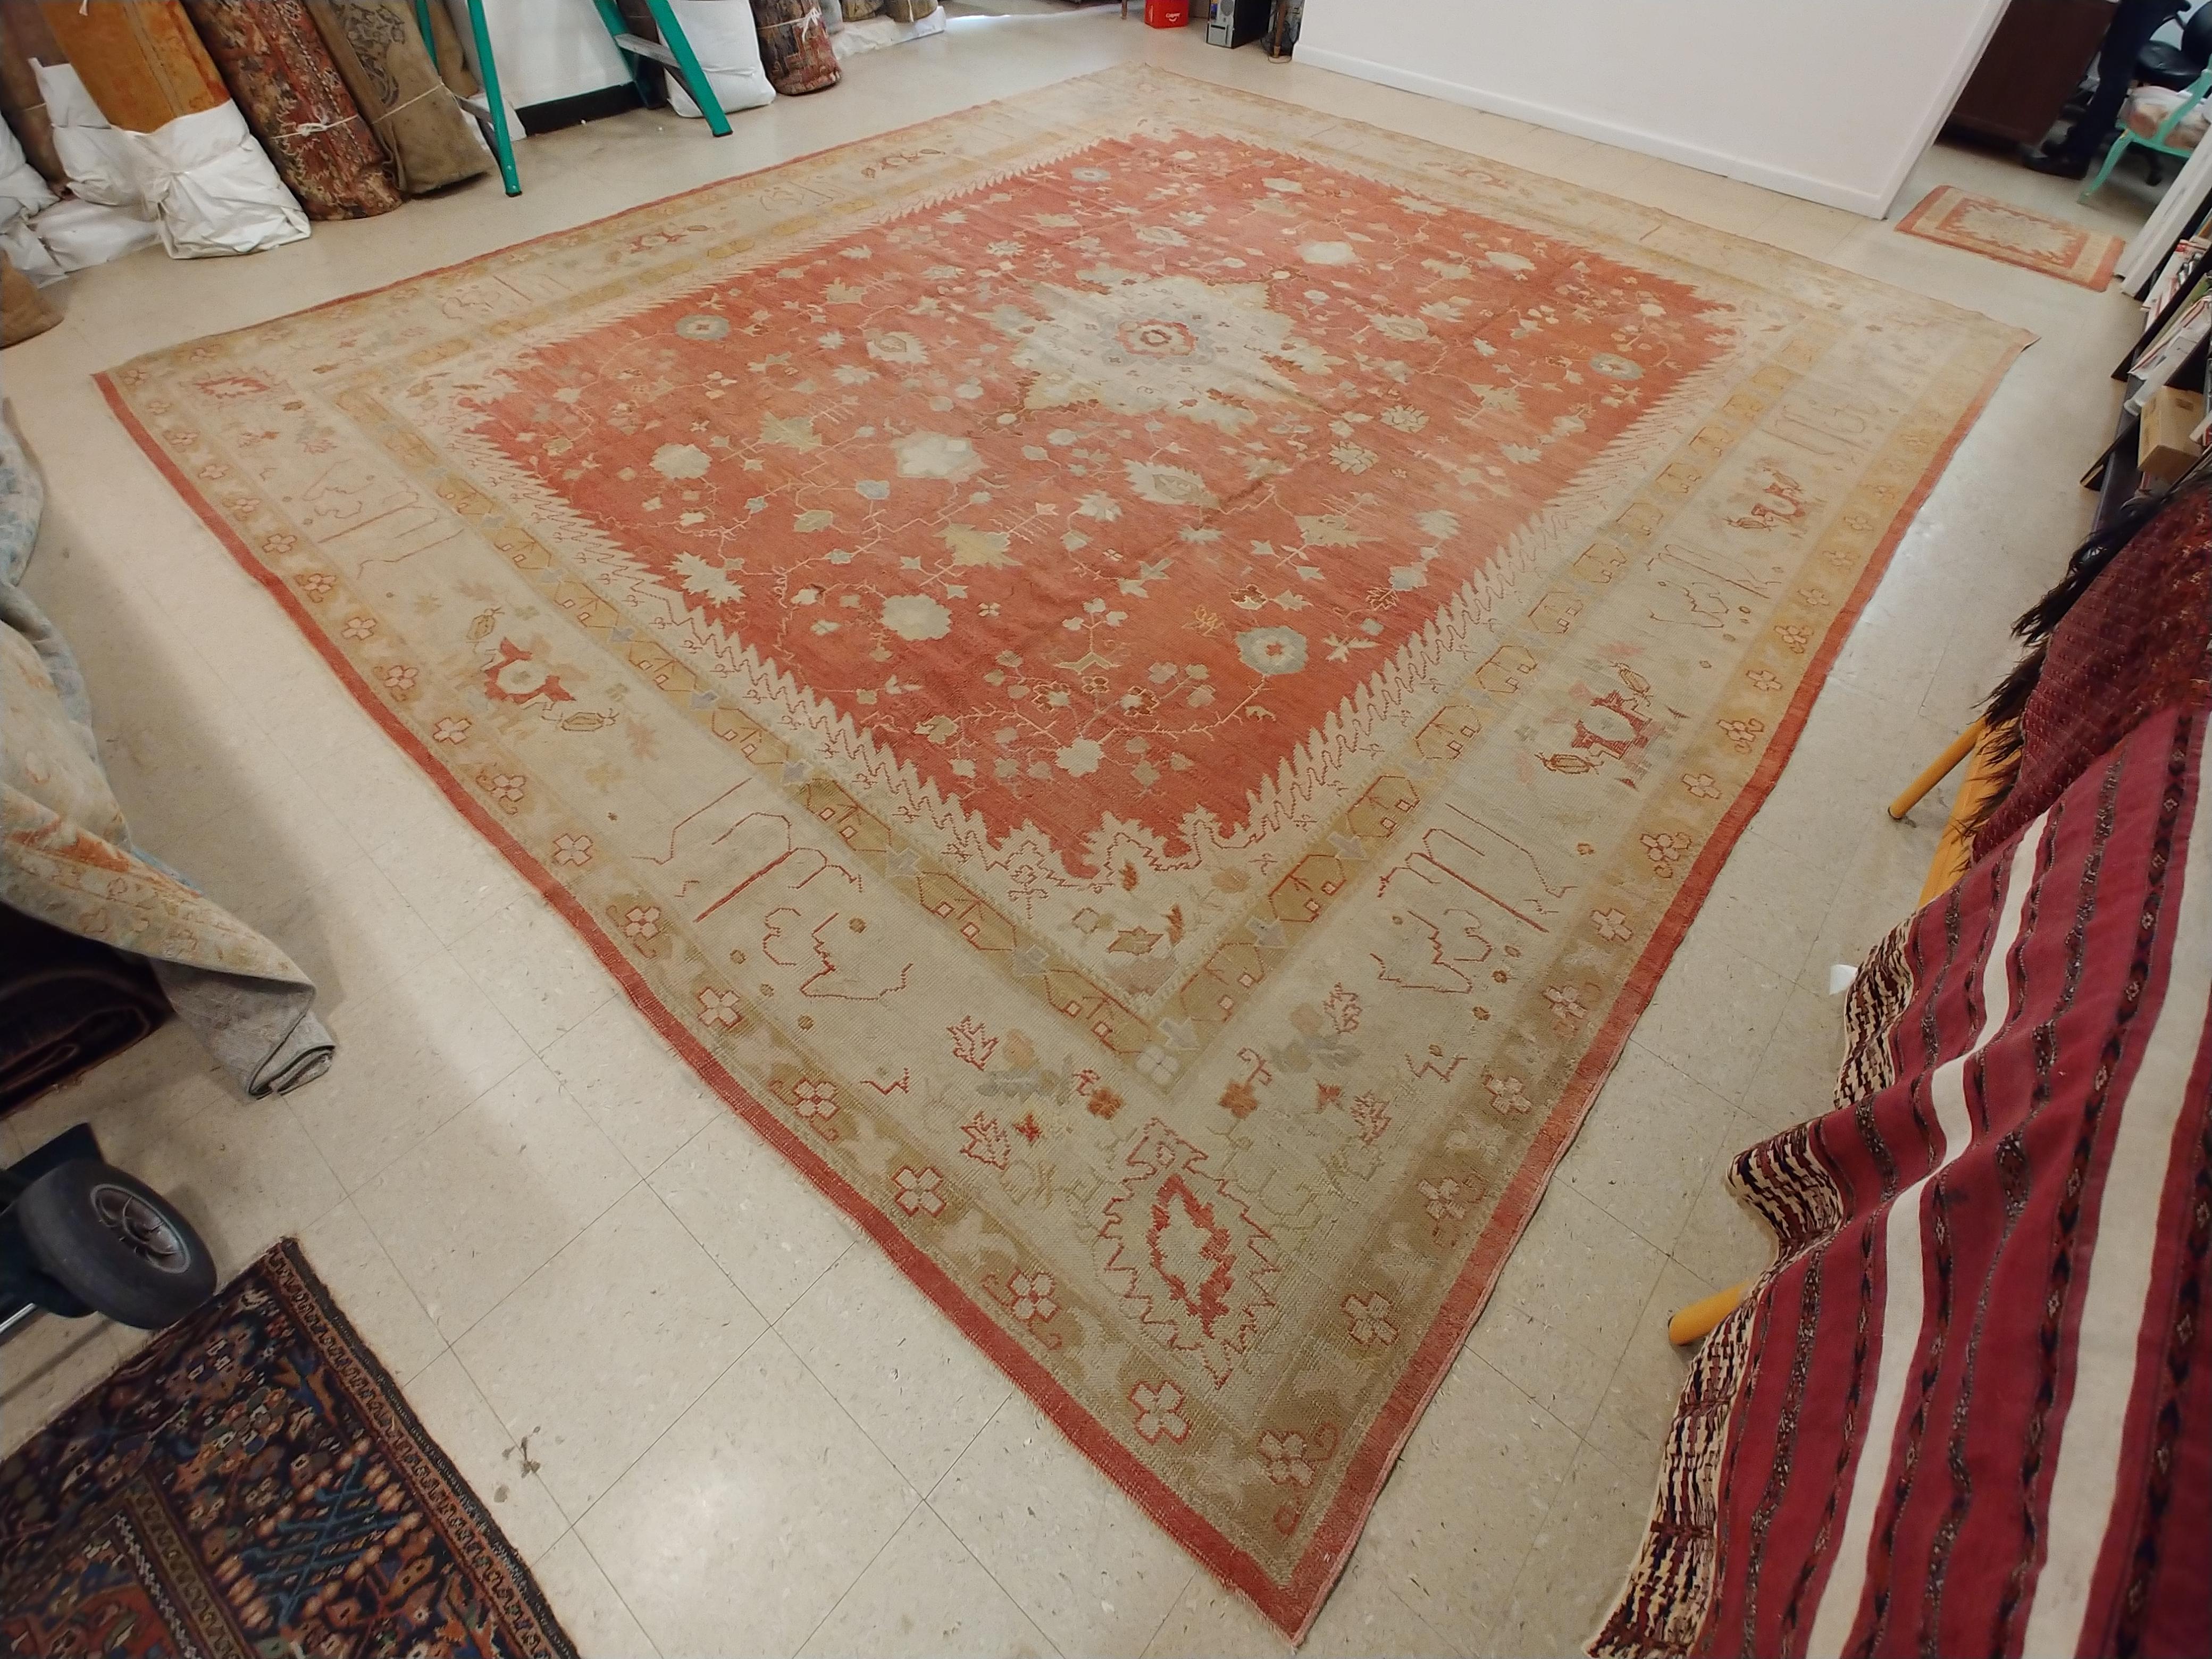 Antique Oushak Carpet, Handmade Turkish Oriental Rug, Beige, Coral, Soft Colors For Sale 3